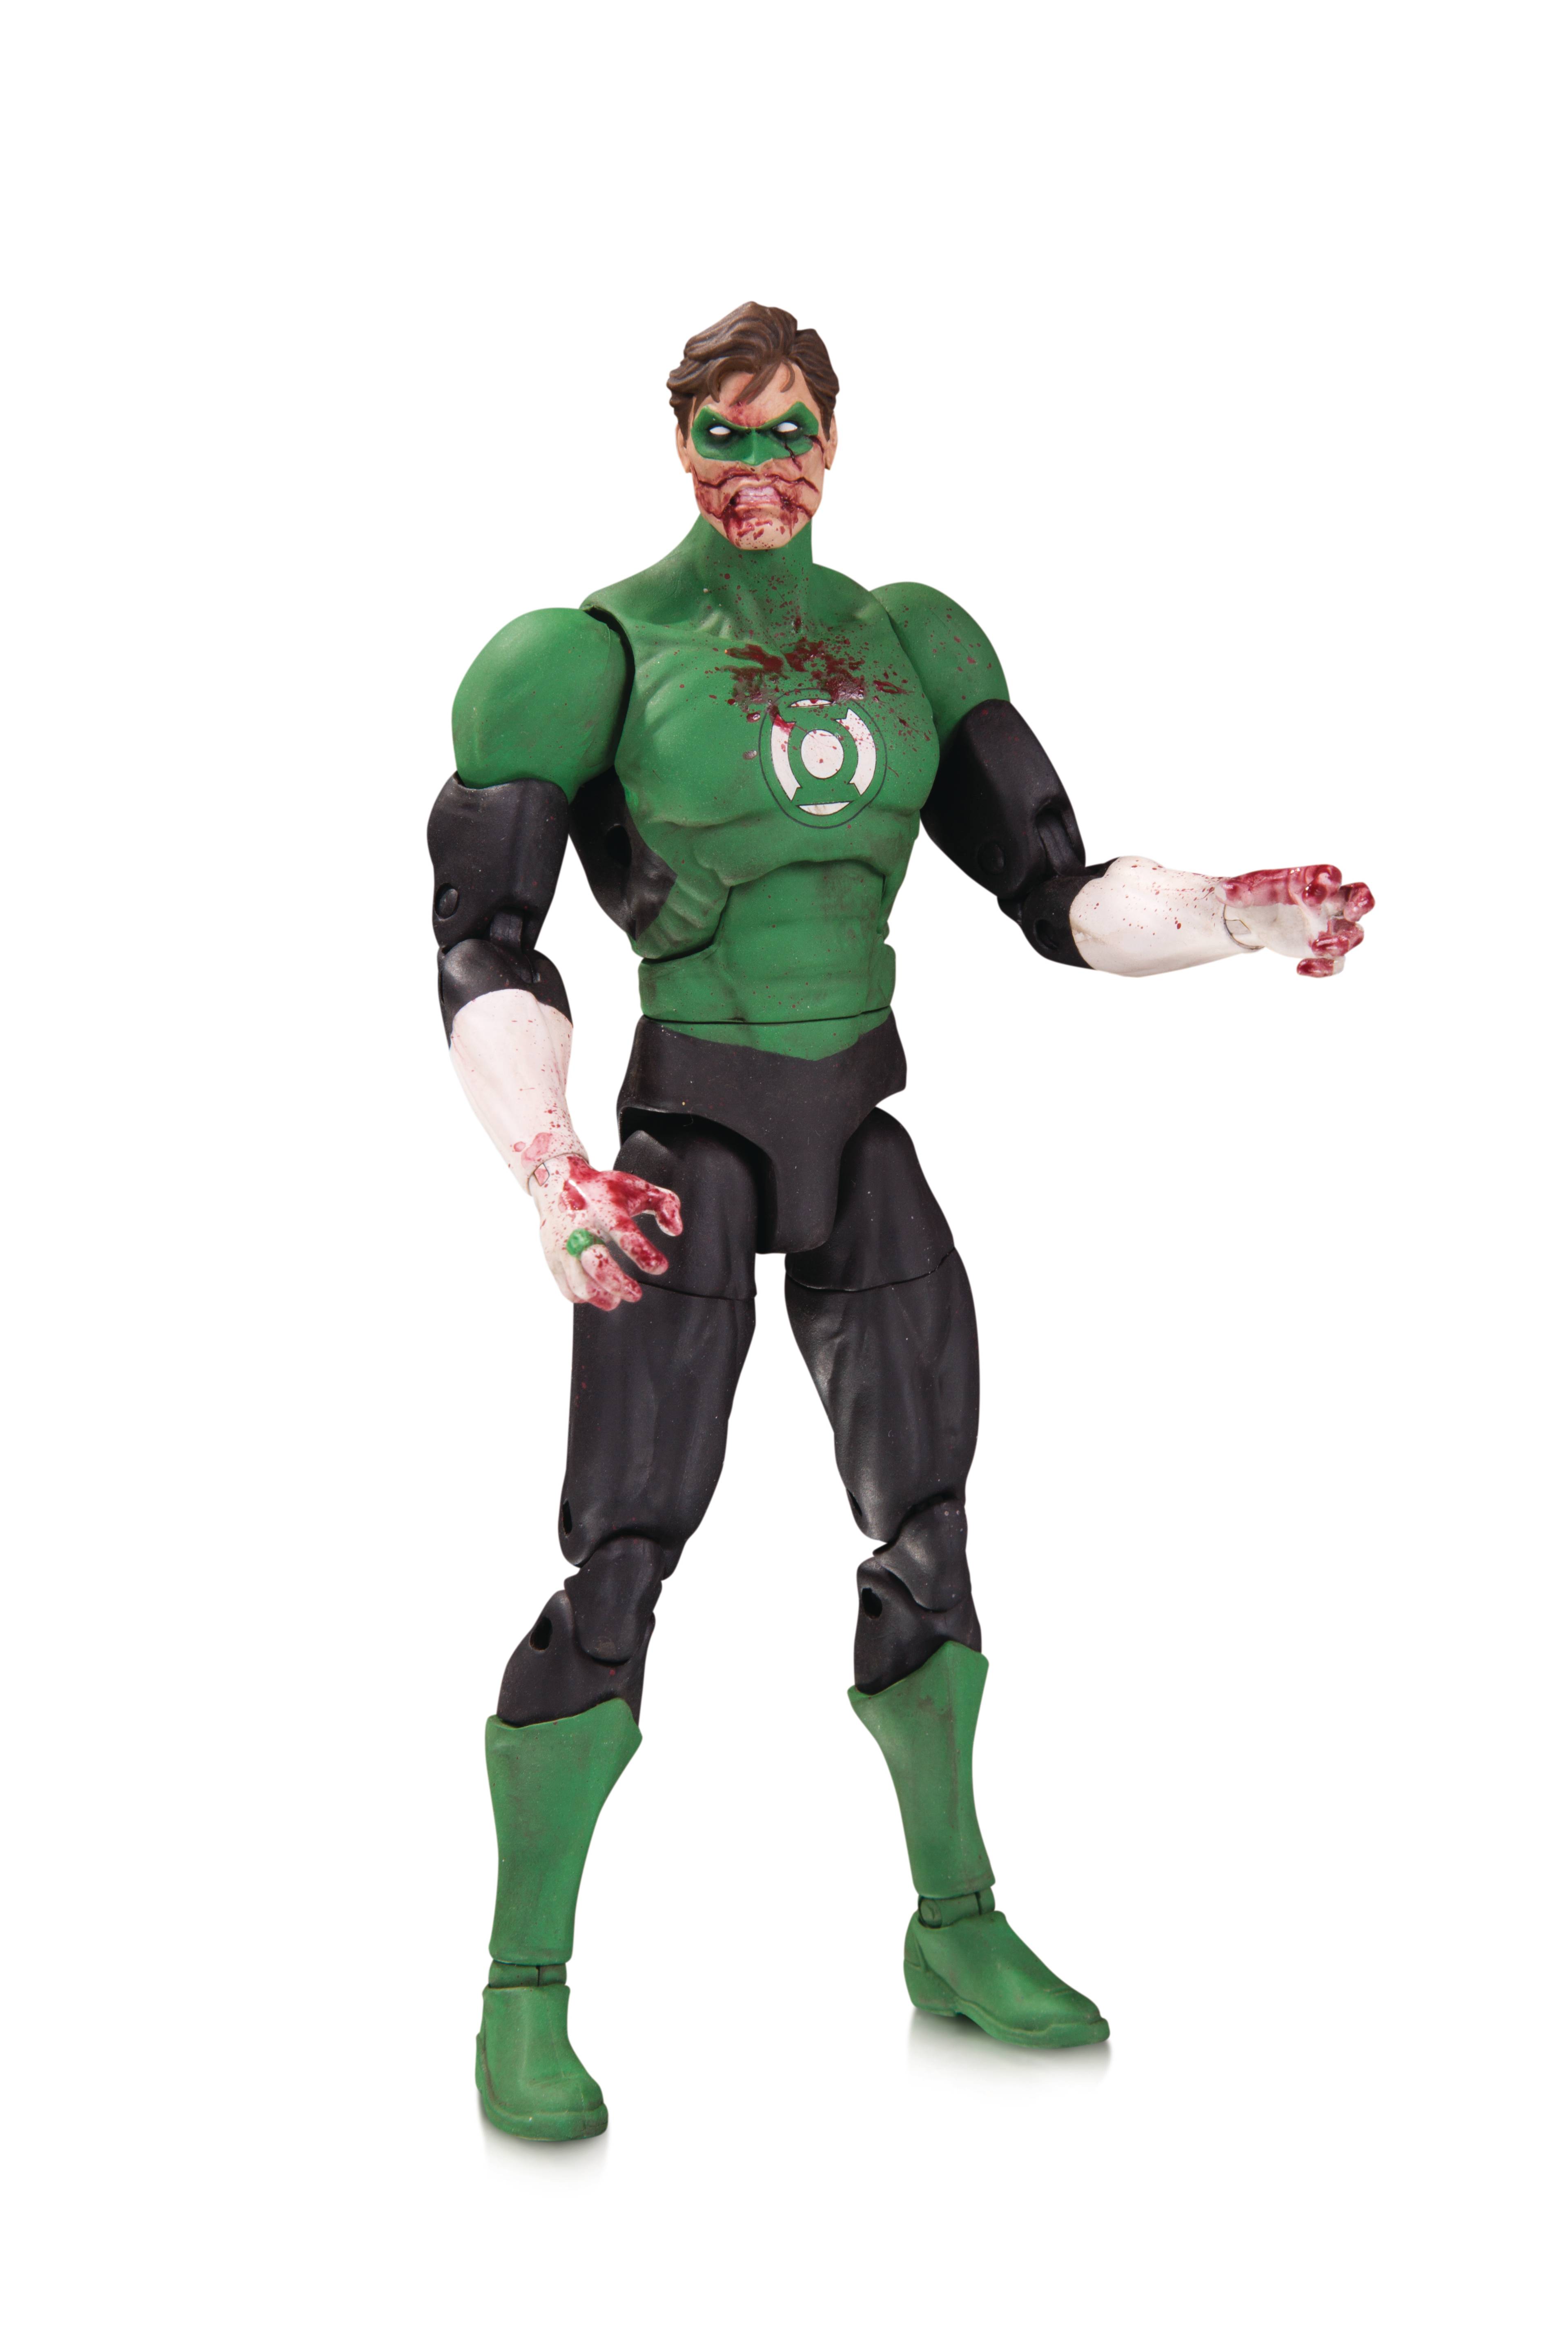 DC Essentials DCeased Green Lantern Action Figure